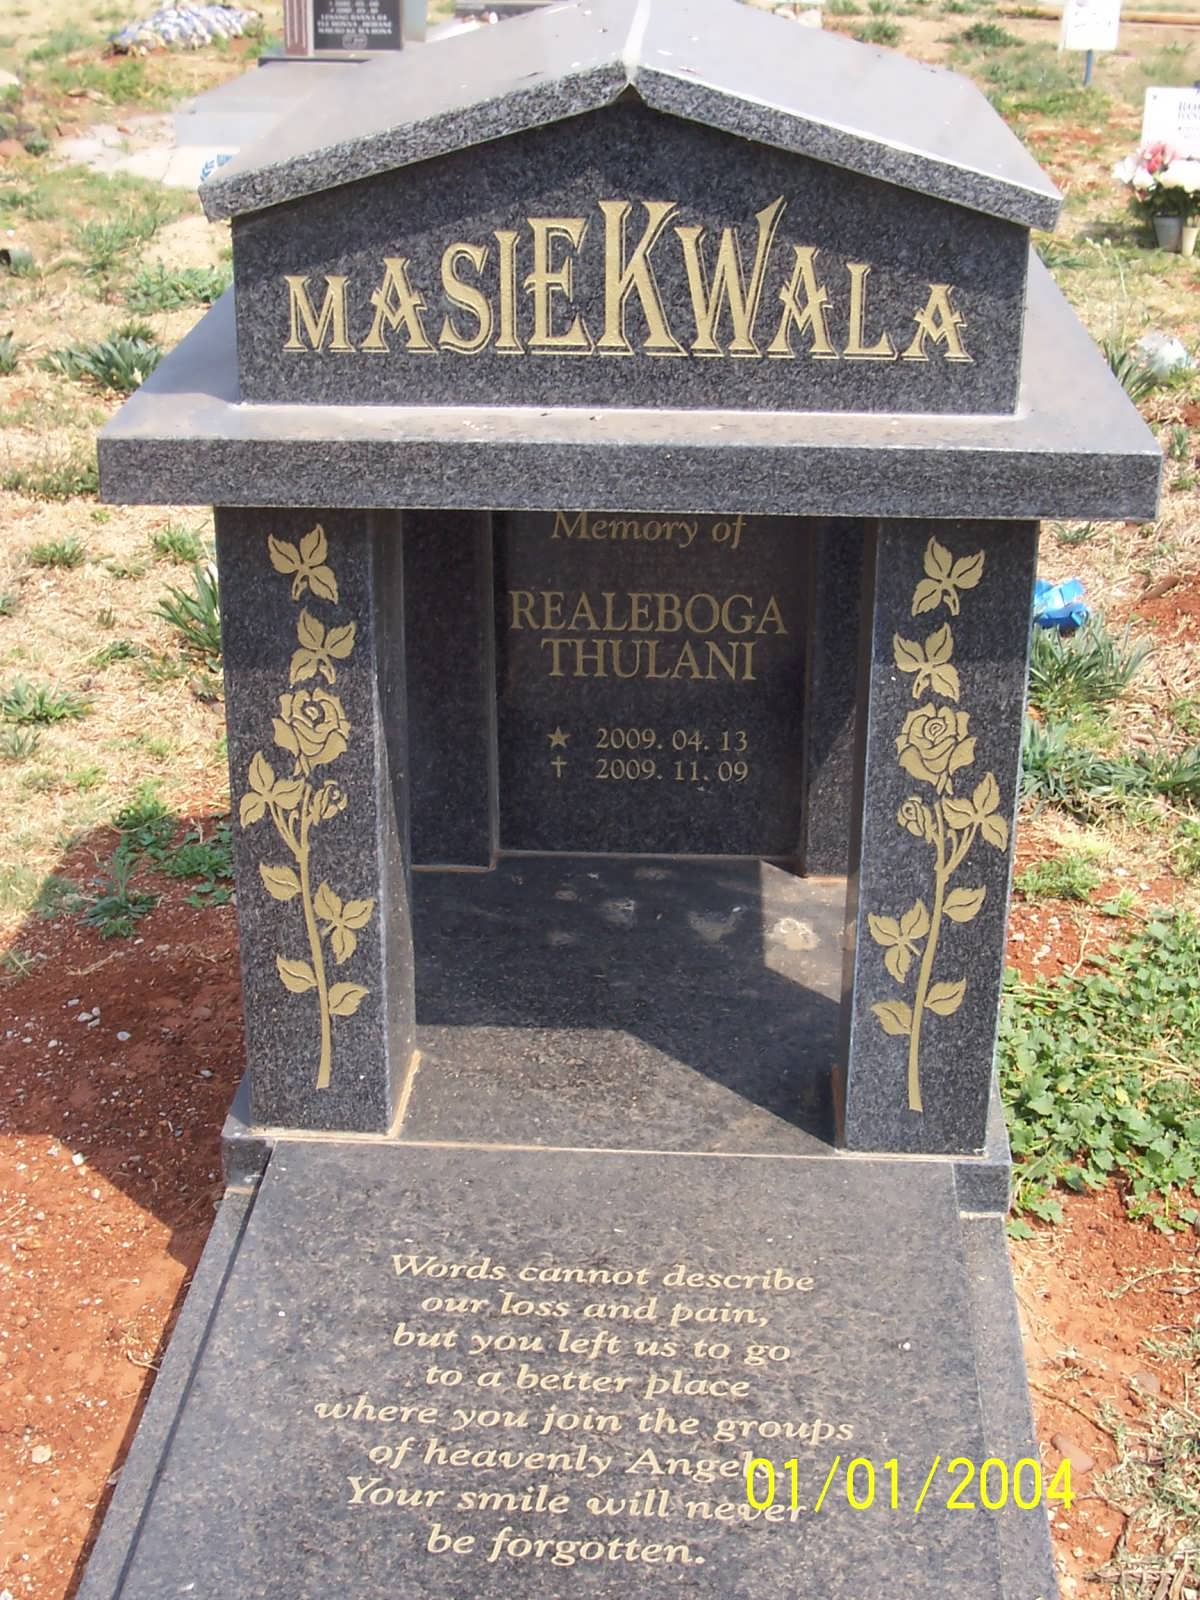 MASIEKWALA Realboga Thulani 2009-2009